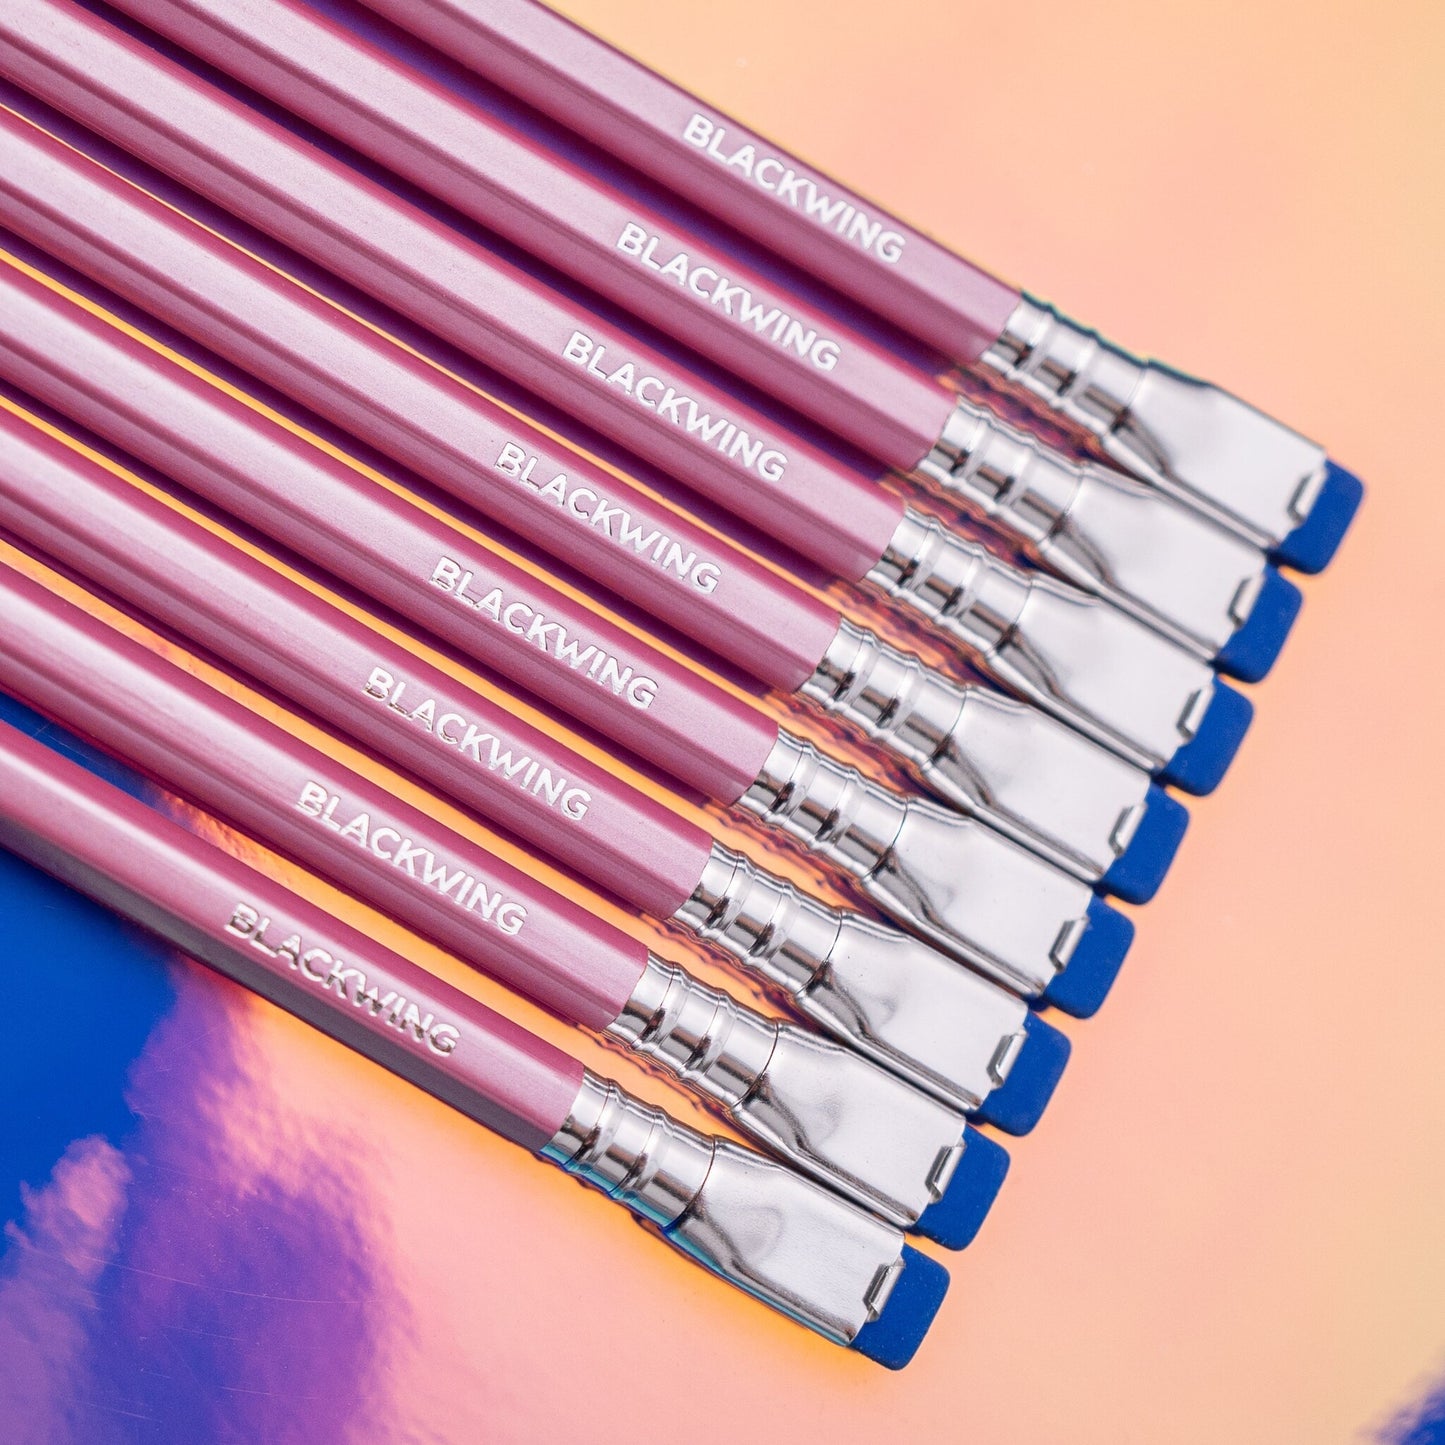 Blackwing Pearl Pencils - Pink (Balanced - Set of 12)